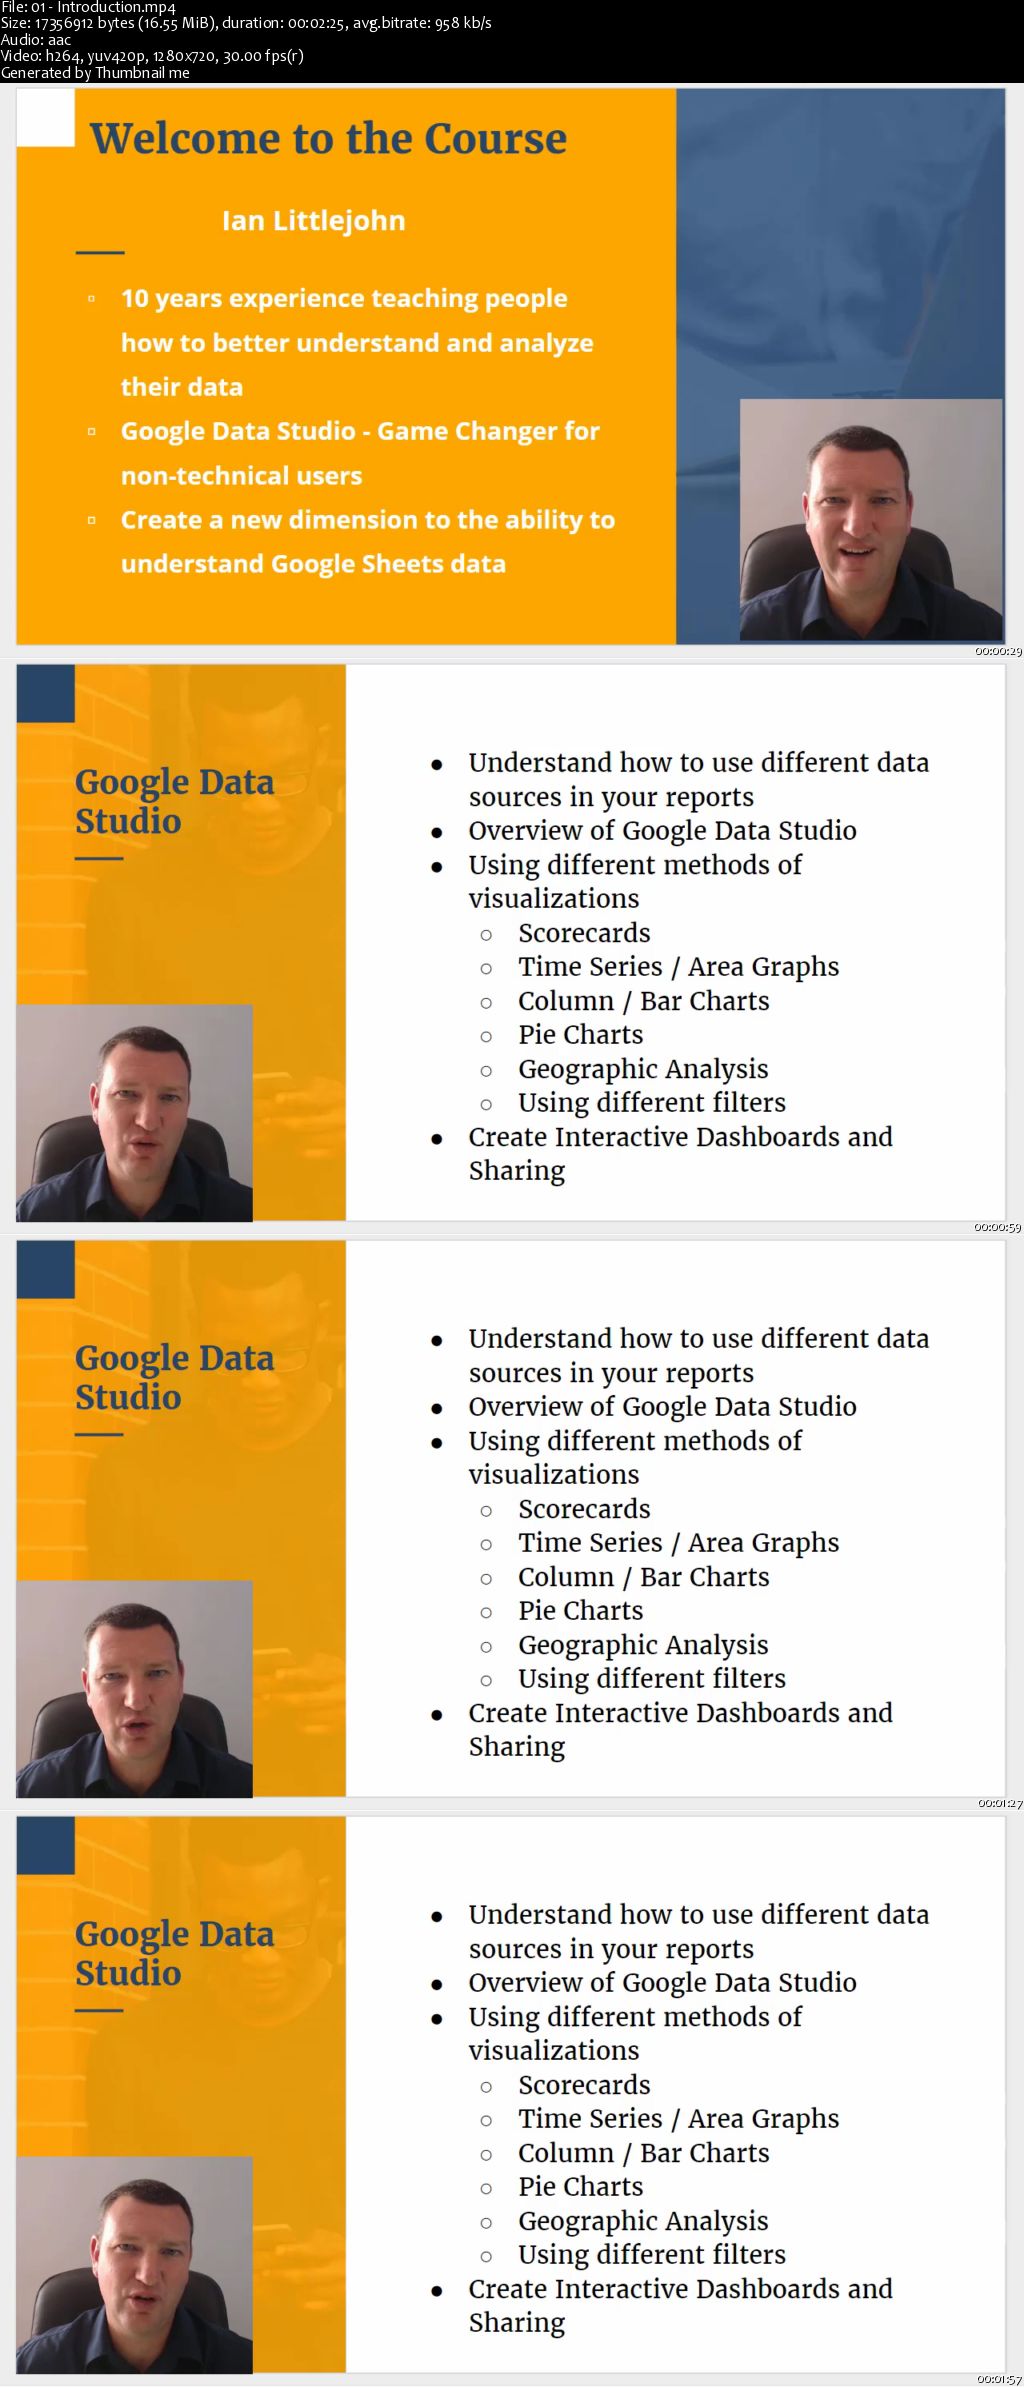 Data Analysis and Dashboards with Google Data Studio